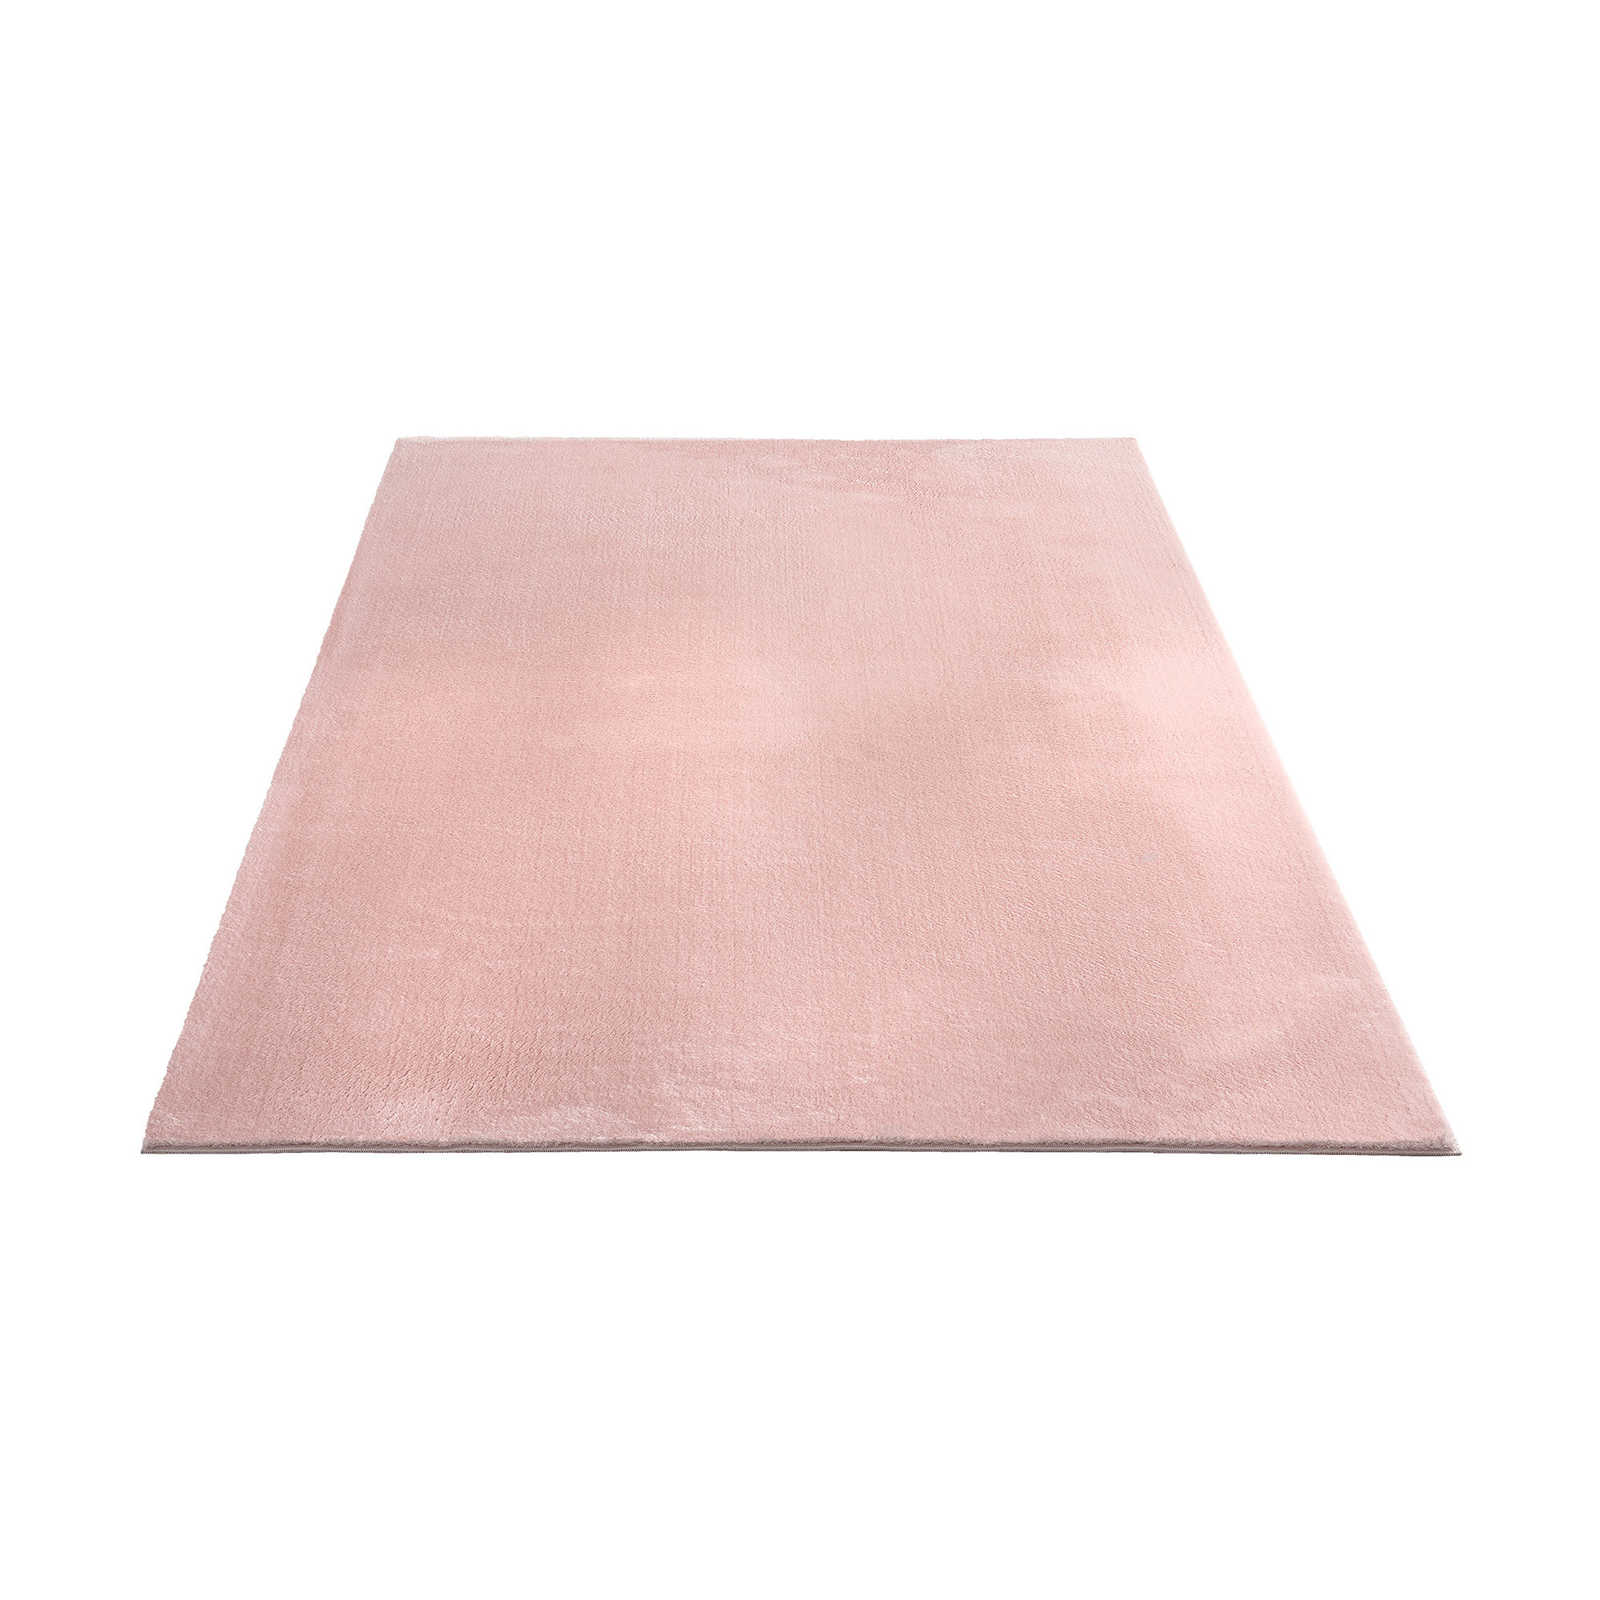 Delicate pile carpet in pink - 290 x 200 cm
